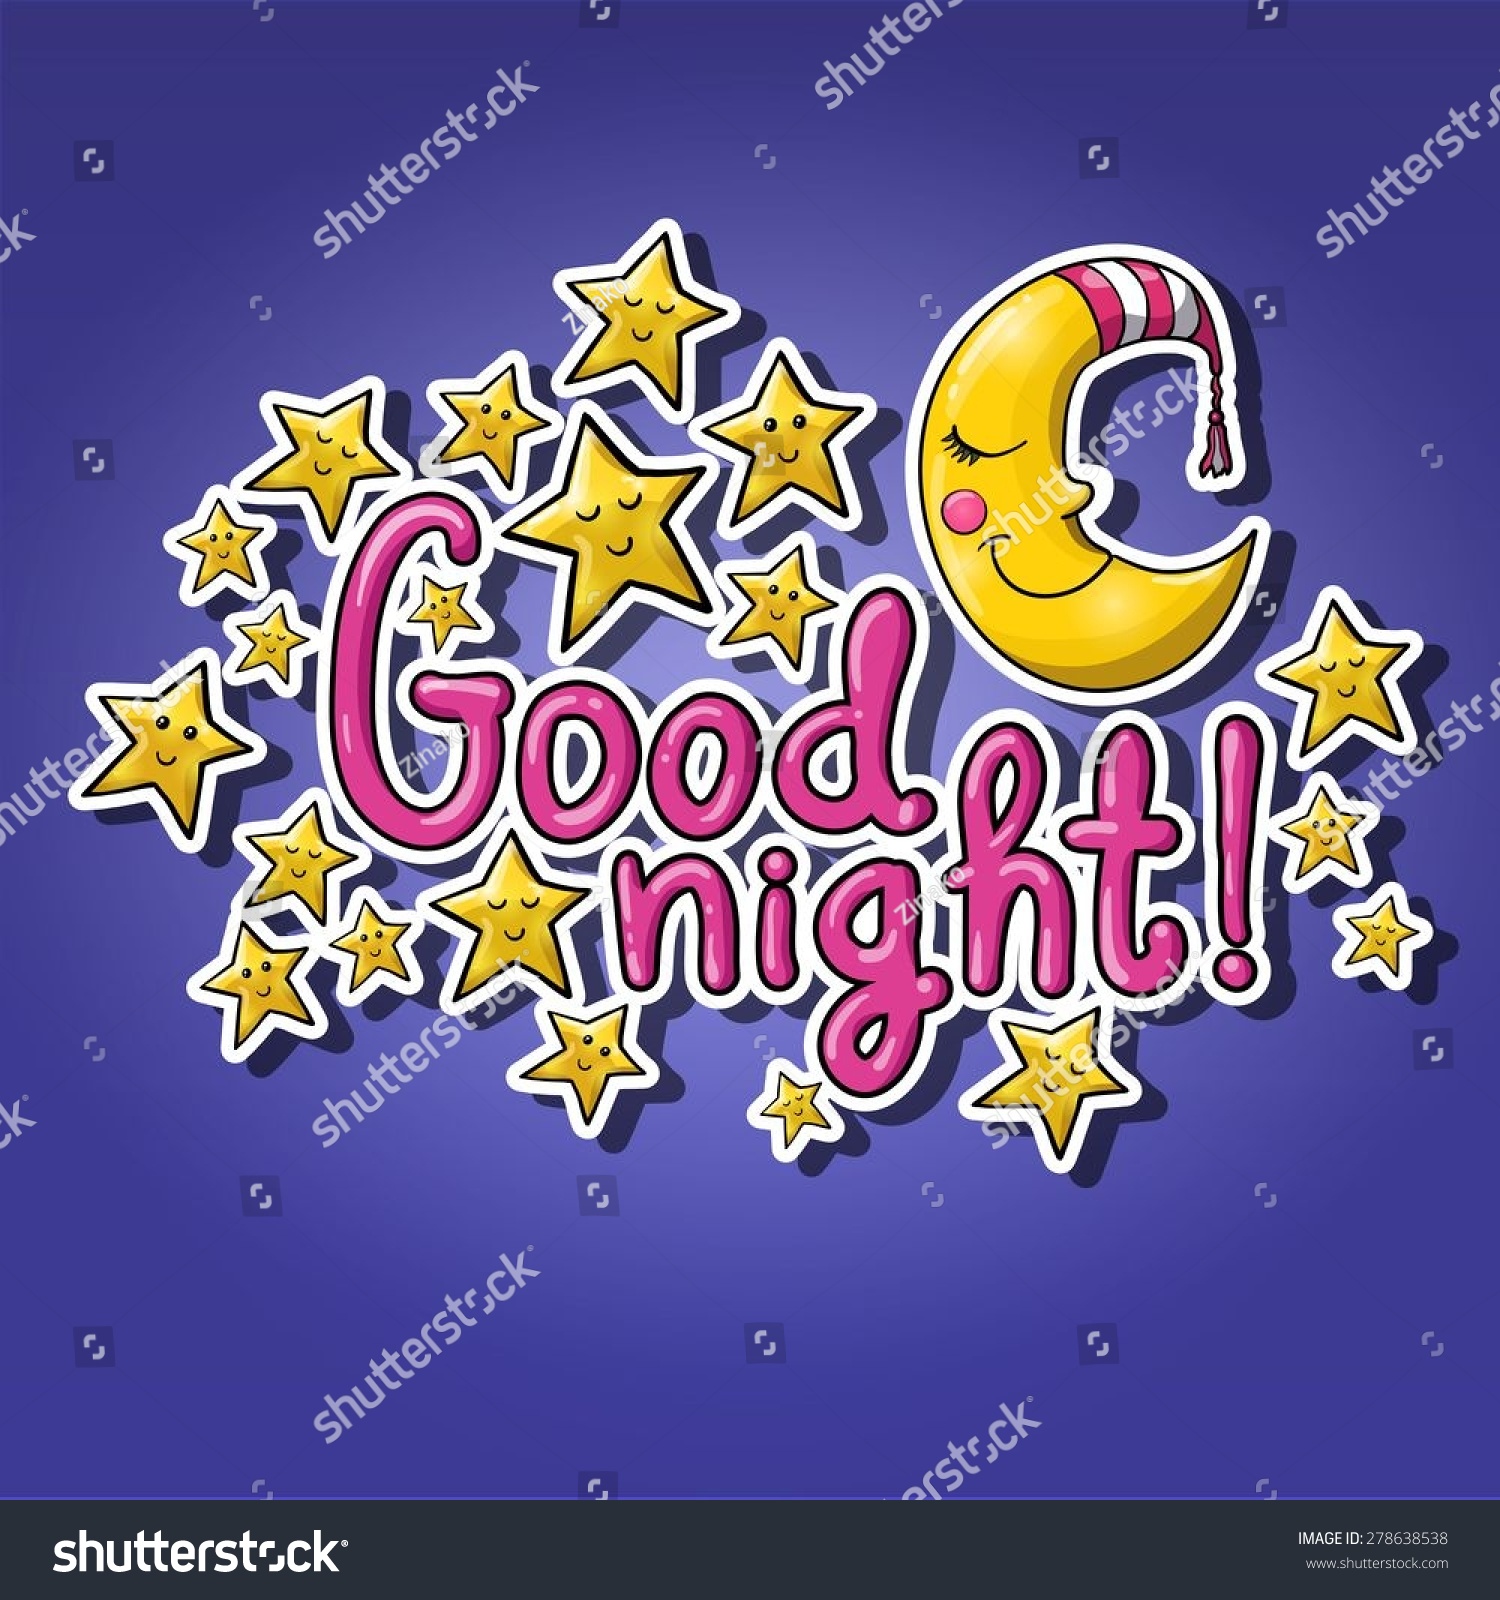 Good Night Sleeping Moon Striped Cap Stock Vector 278638538 - Shutterstock